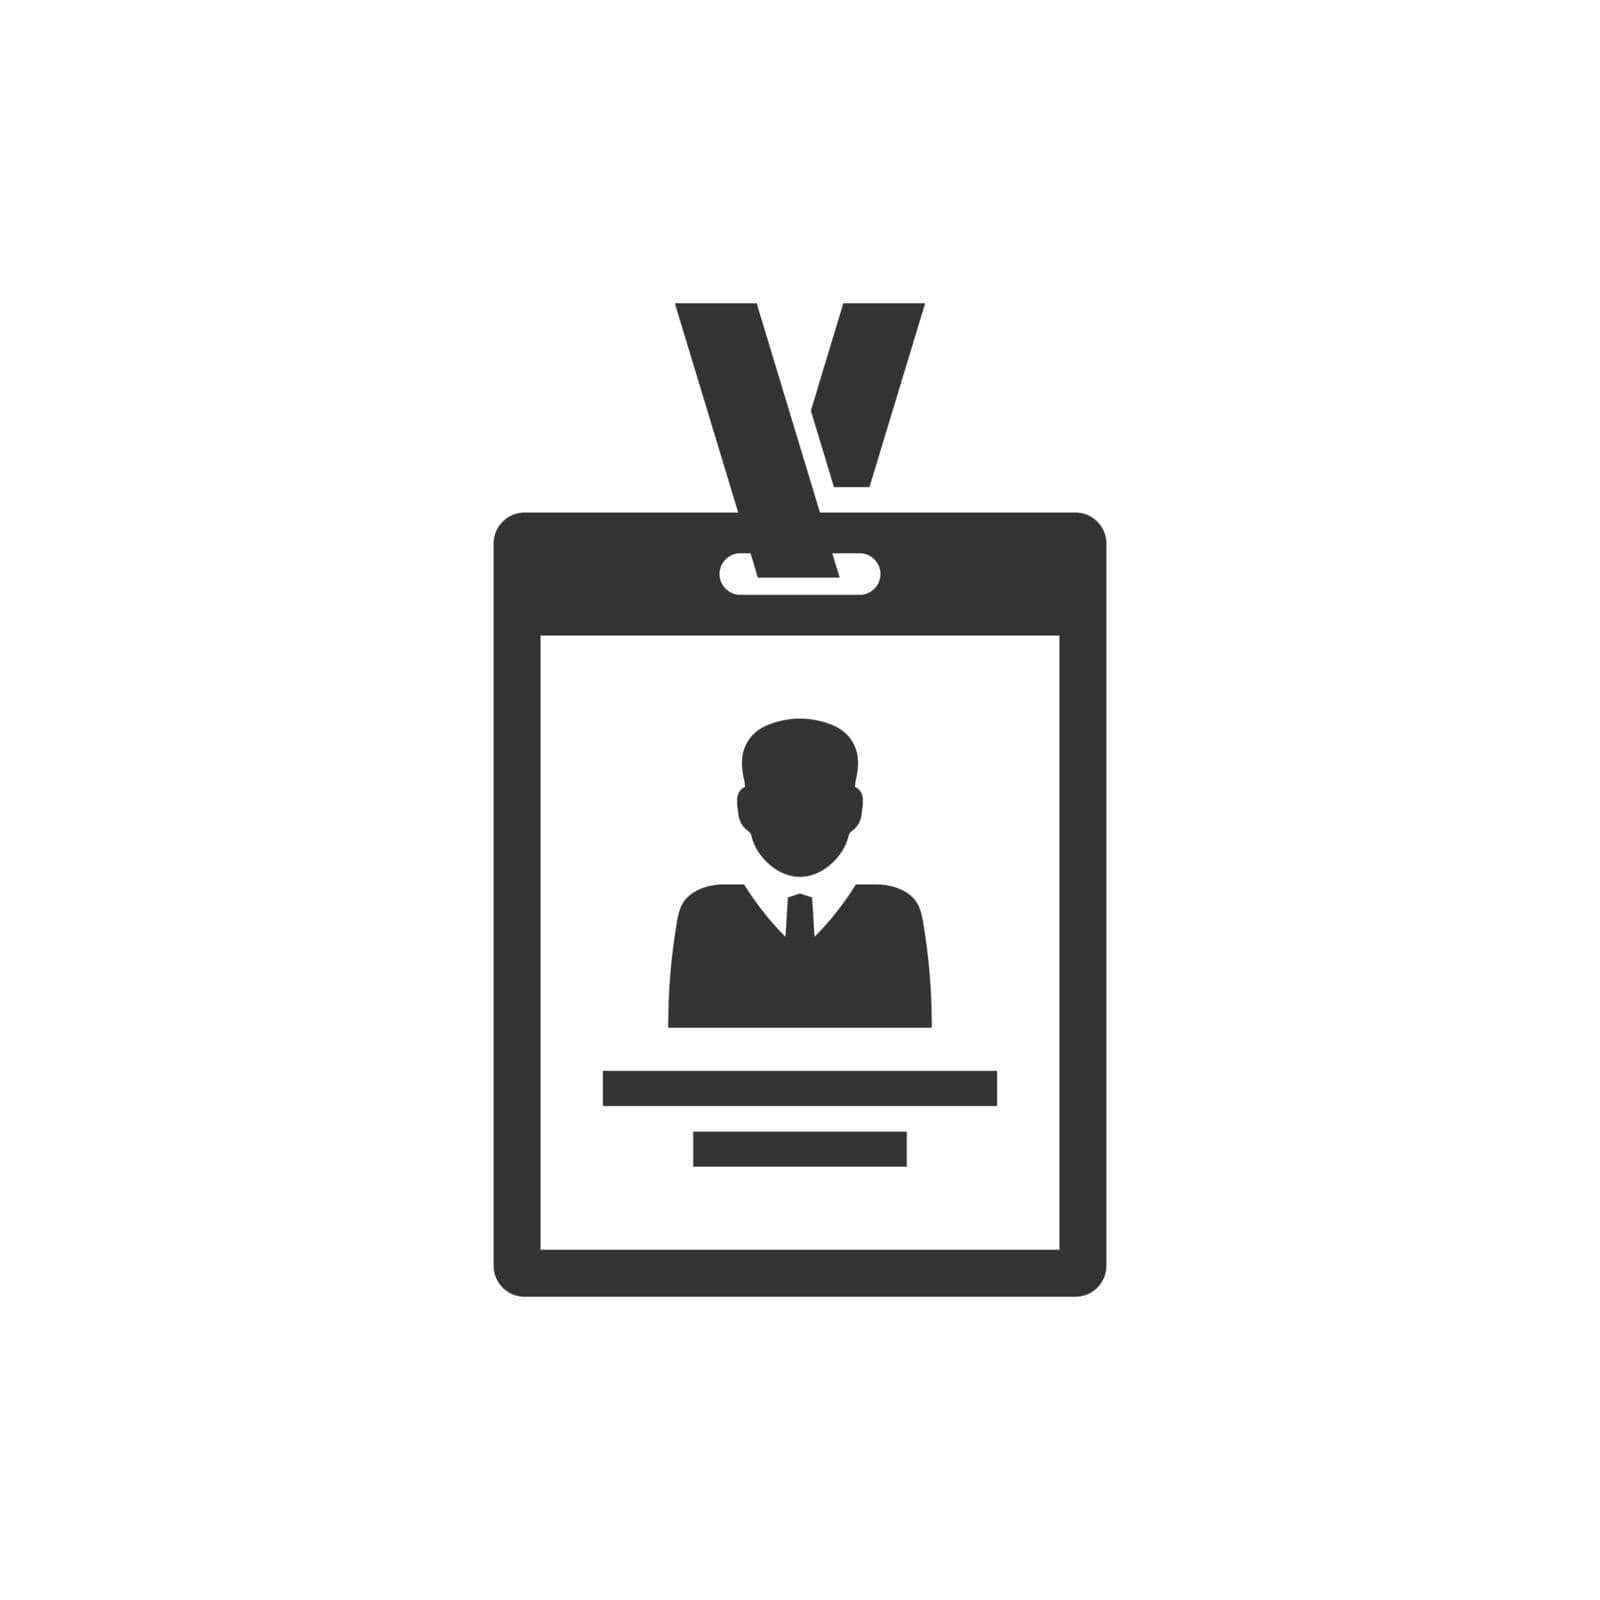 Employee identity card icon  by delwar018